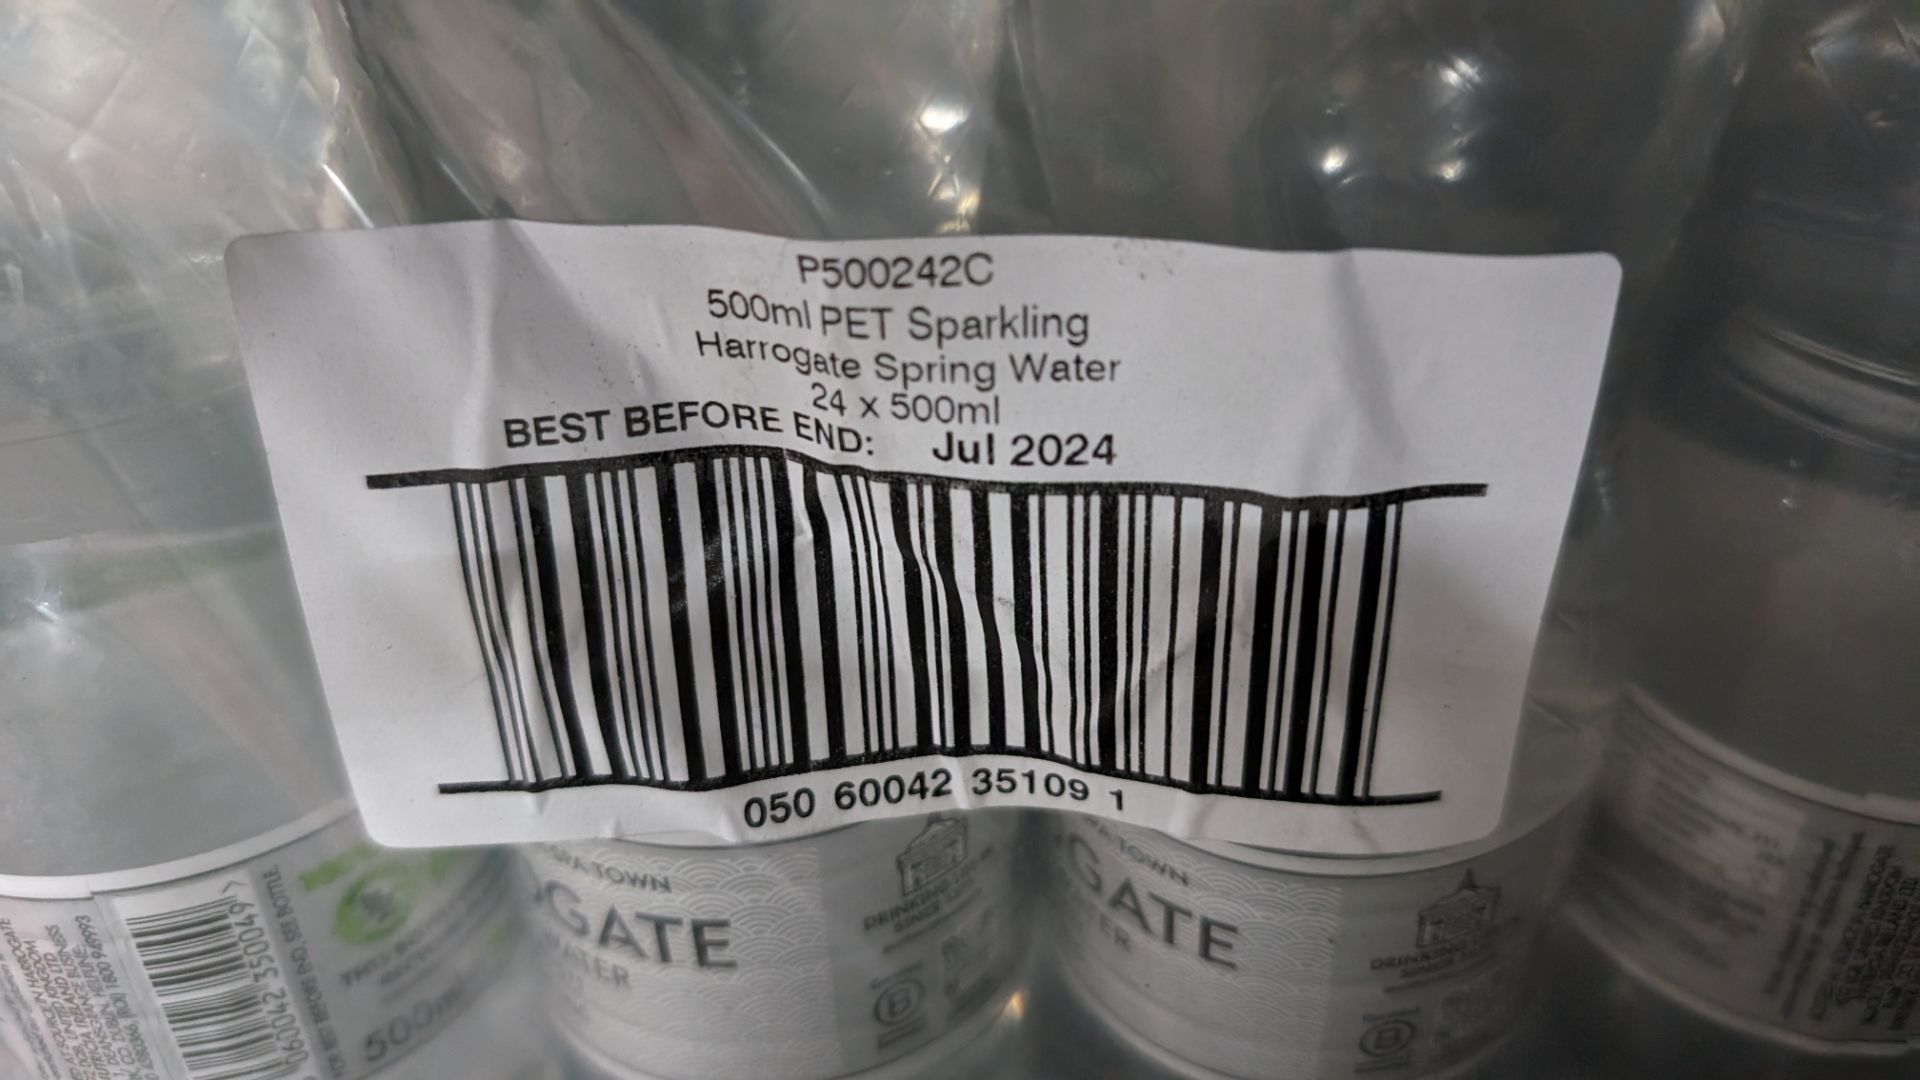 96 off 500ml bottles of Harrogate sparkling spring water, best before date July 2024 (4 cartons) - Image 4 of 5